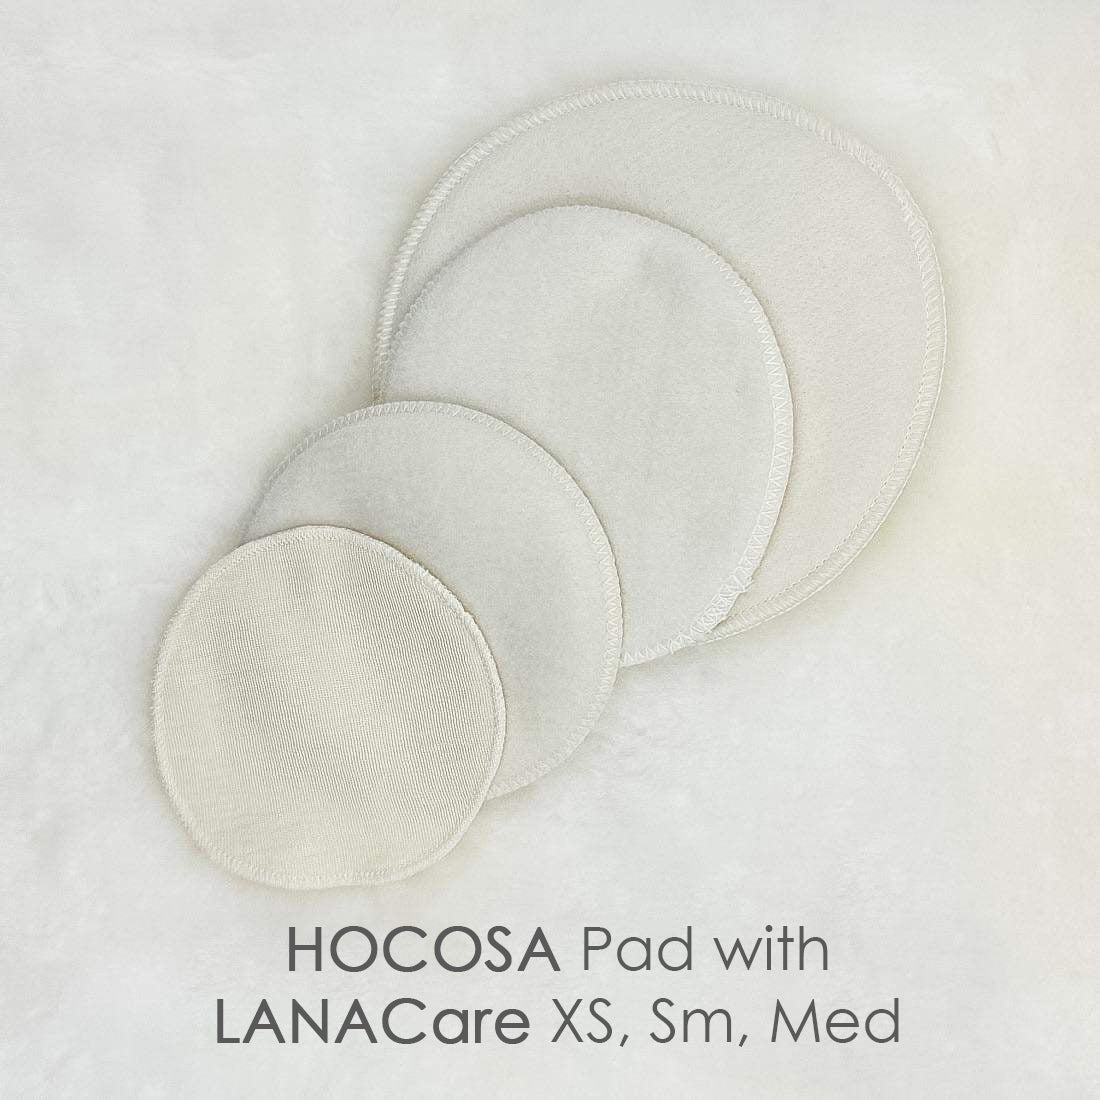 HOCOSA Wool-Silk Bra Liners